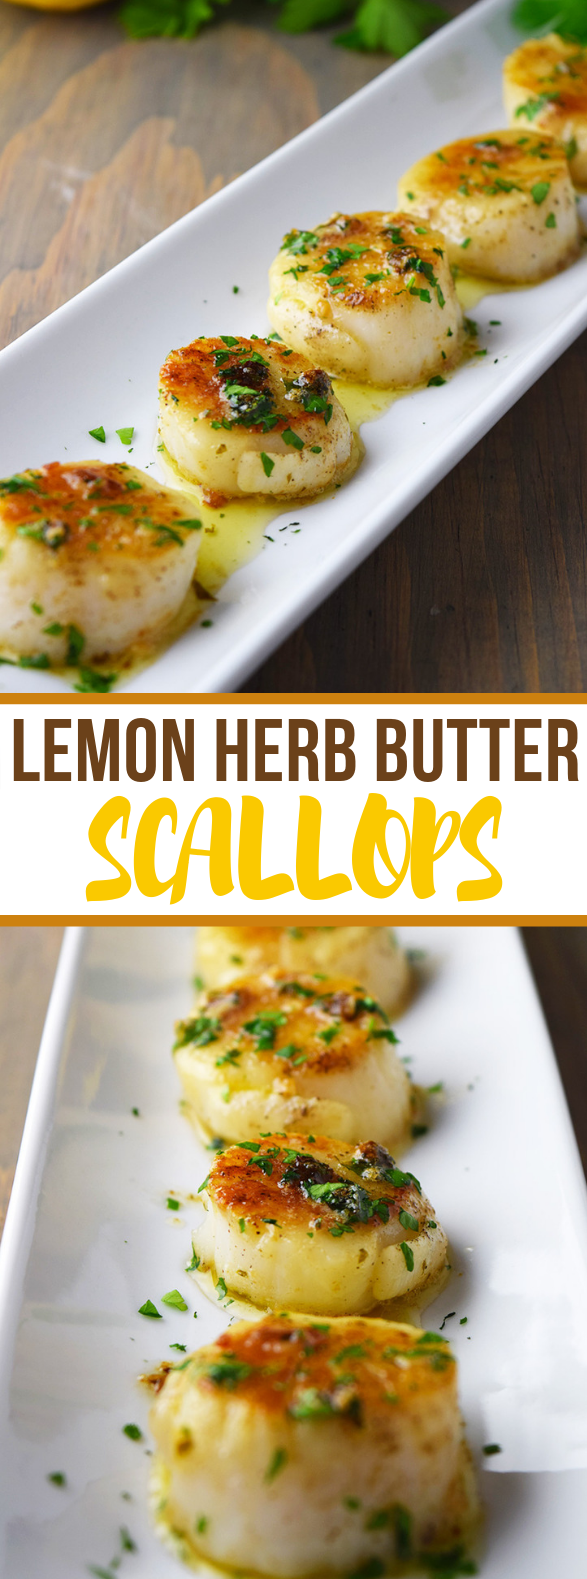 Pan-Seared Scallops with Lemon Butter Recipe #dinner #appetizer